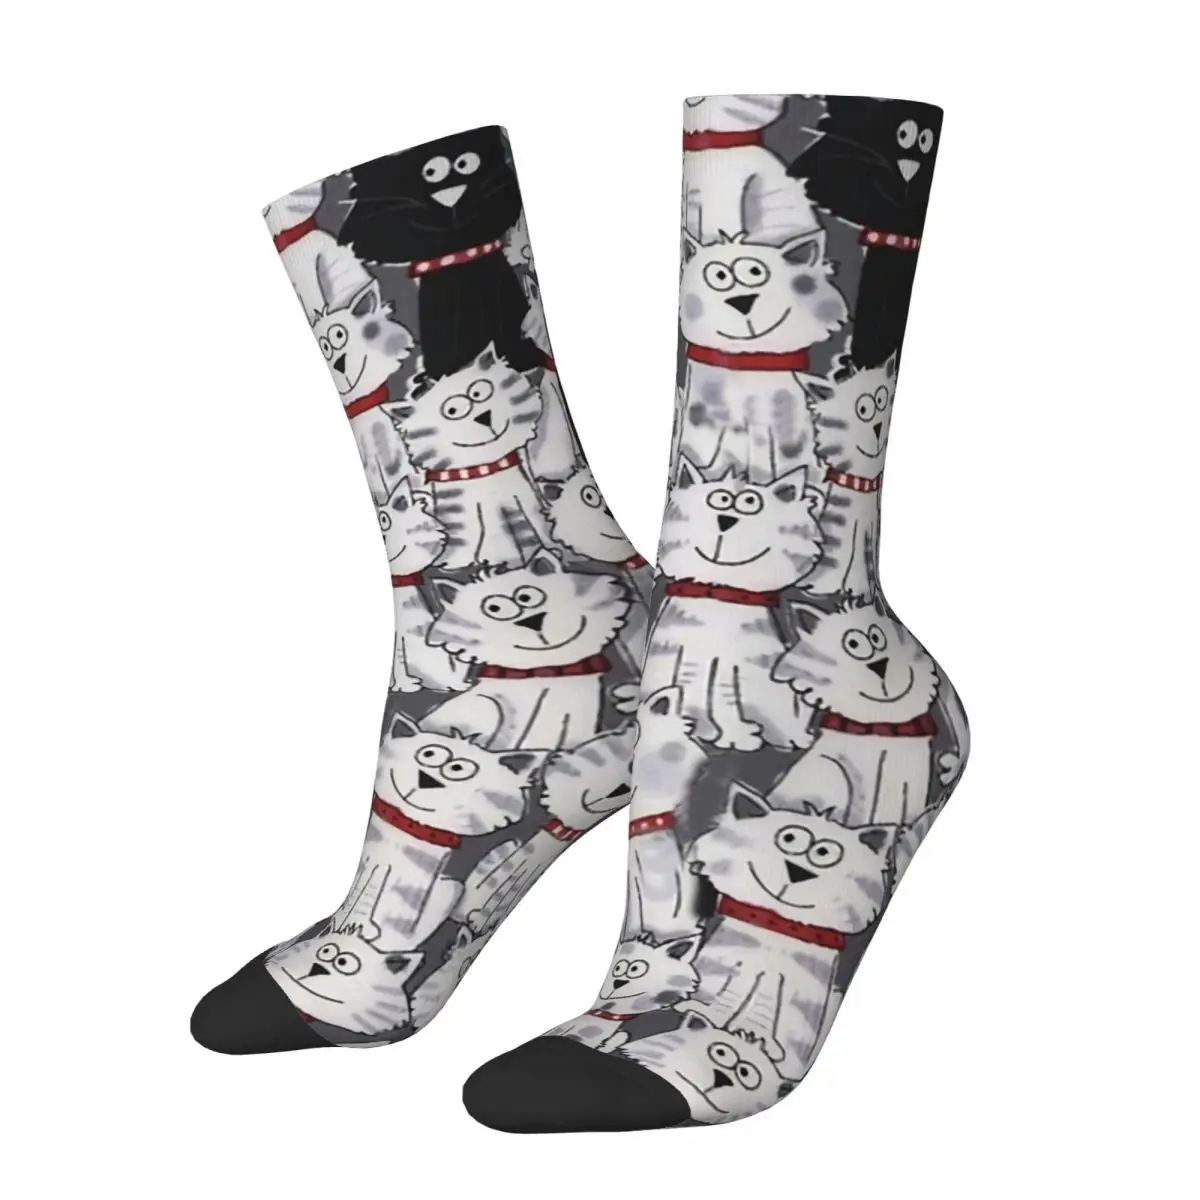 

Funny Men's Socks Cuties Vintage Harajuku Cat Meow Street Style Novelty Crew Crazy Sock Gift Pattern Printed